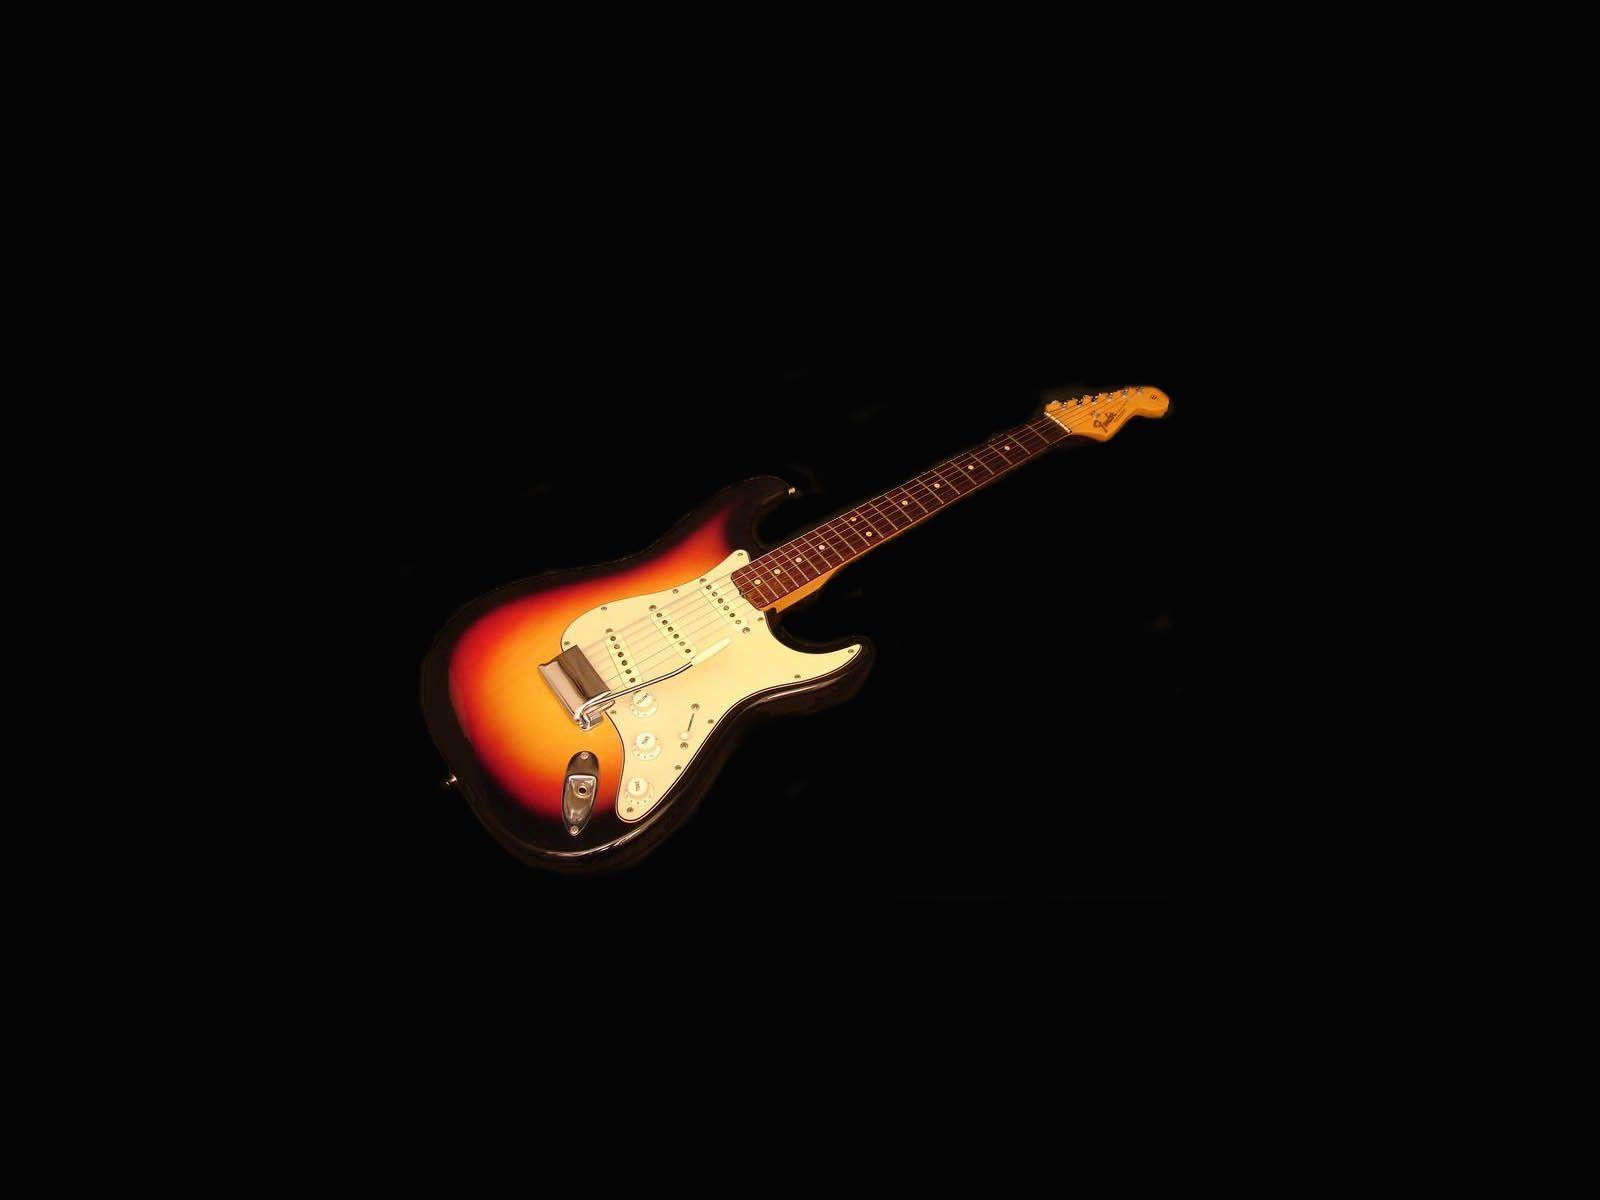 Guitar Fender Stratocaster Black Wallpaper HD Wallpaper. Dan